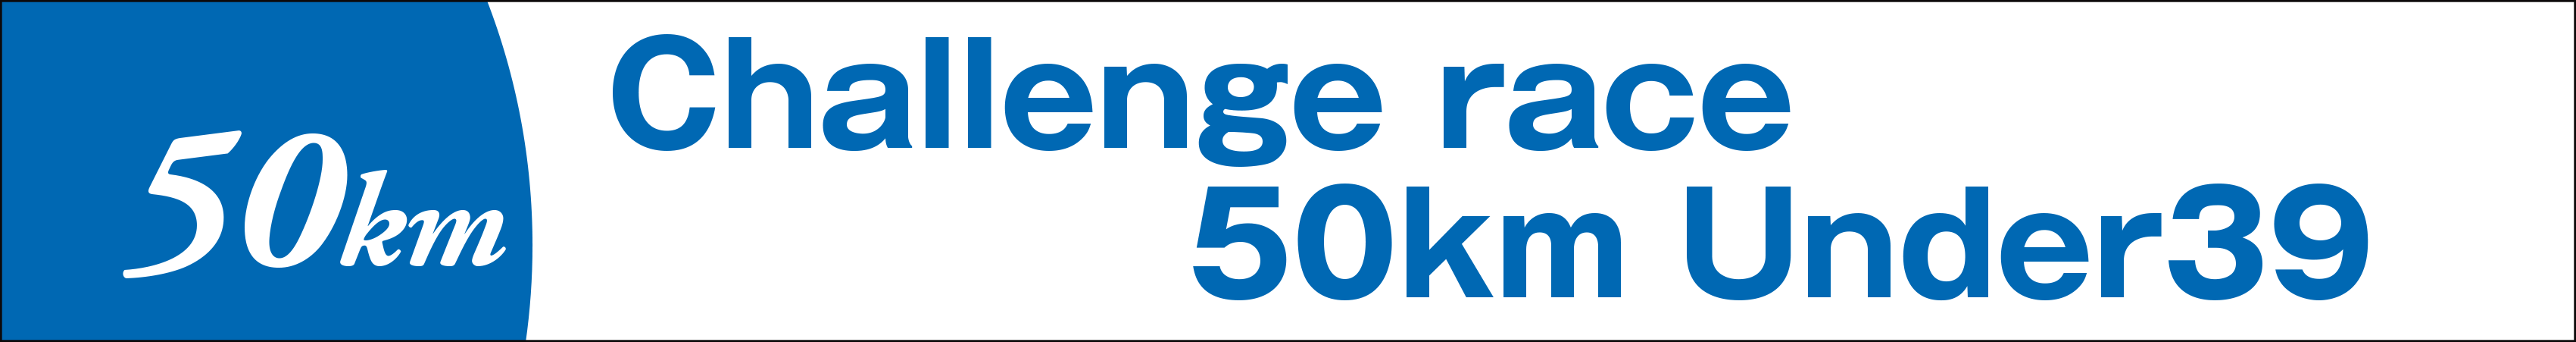 Challenge Race 50km under 39